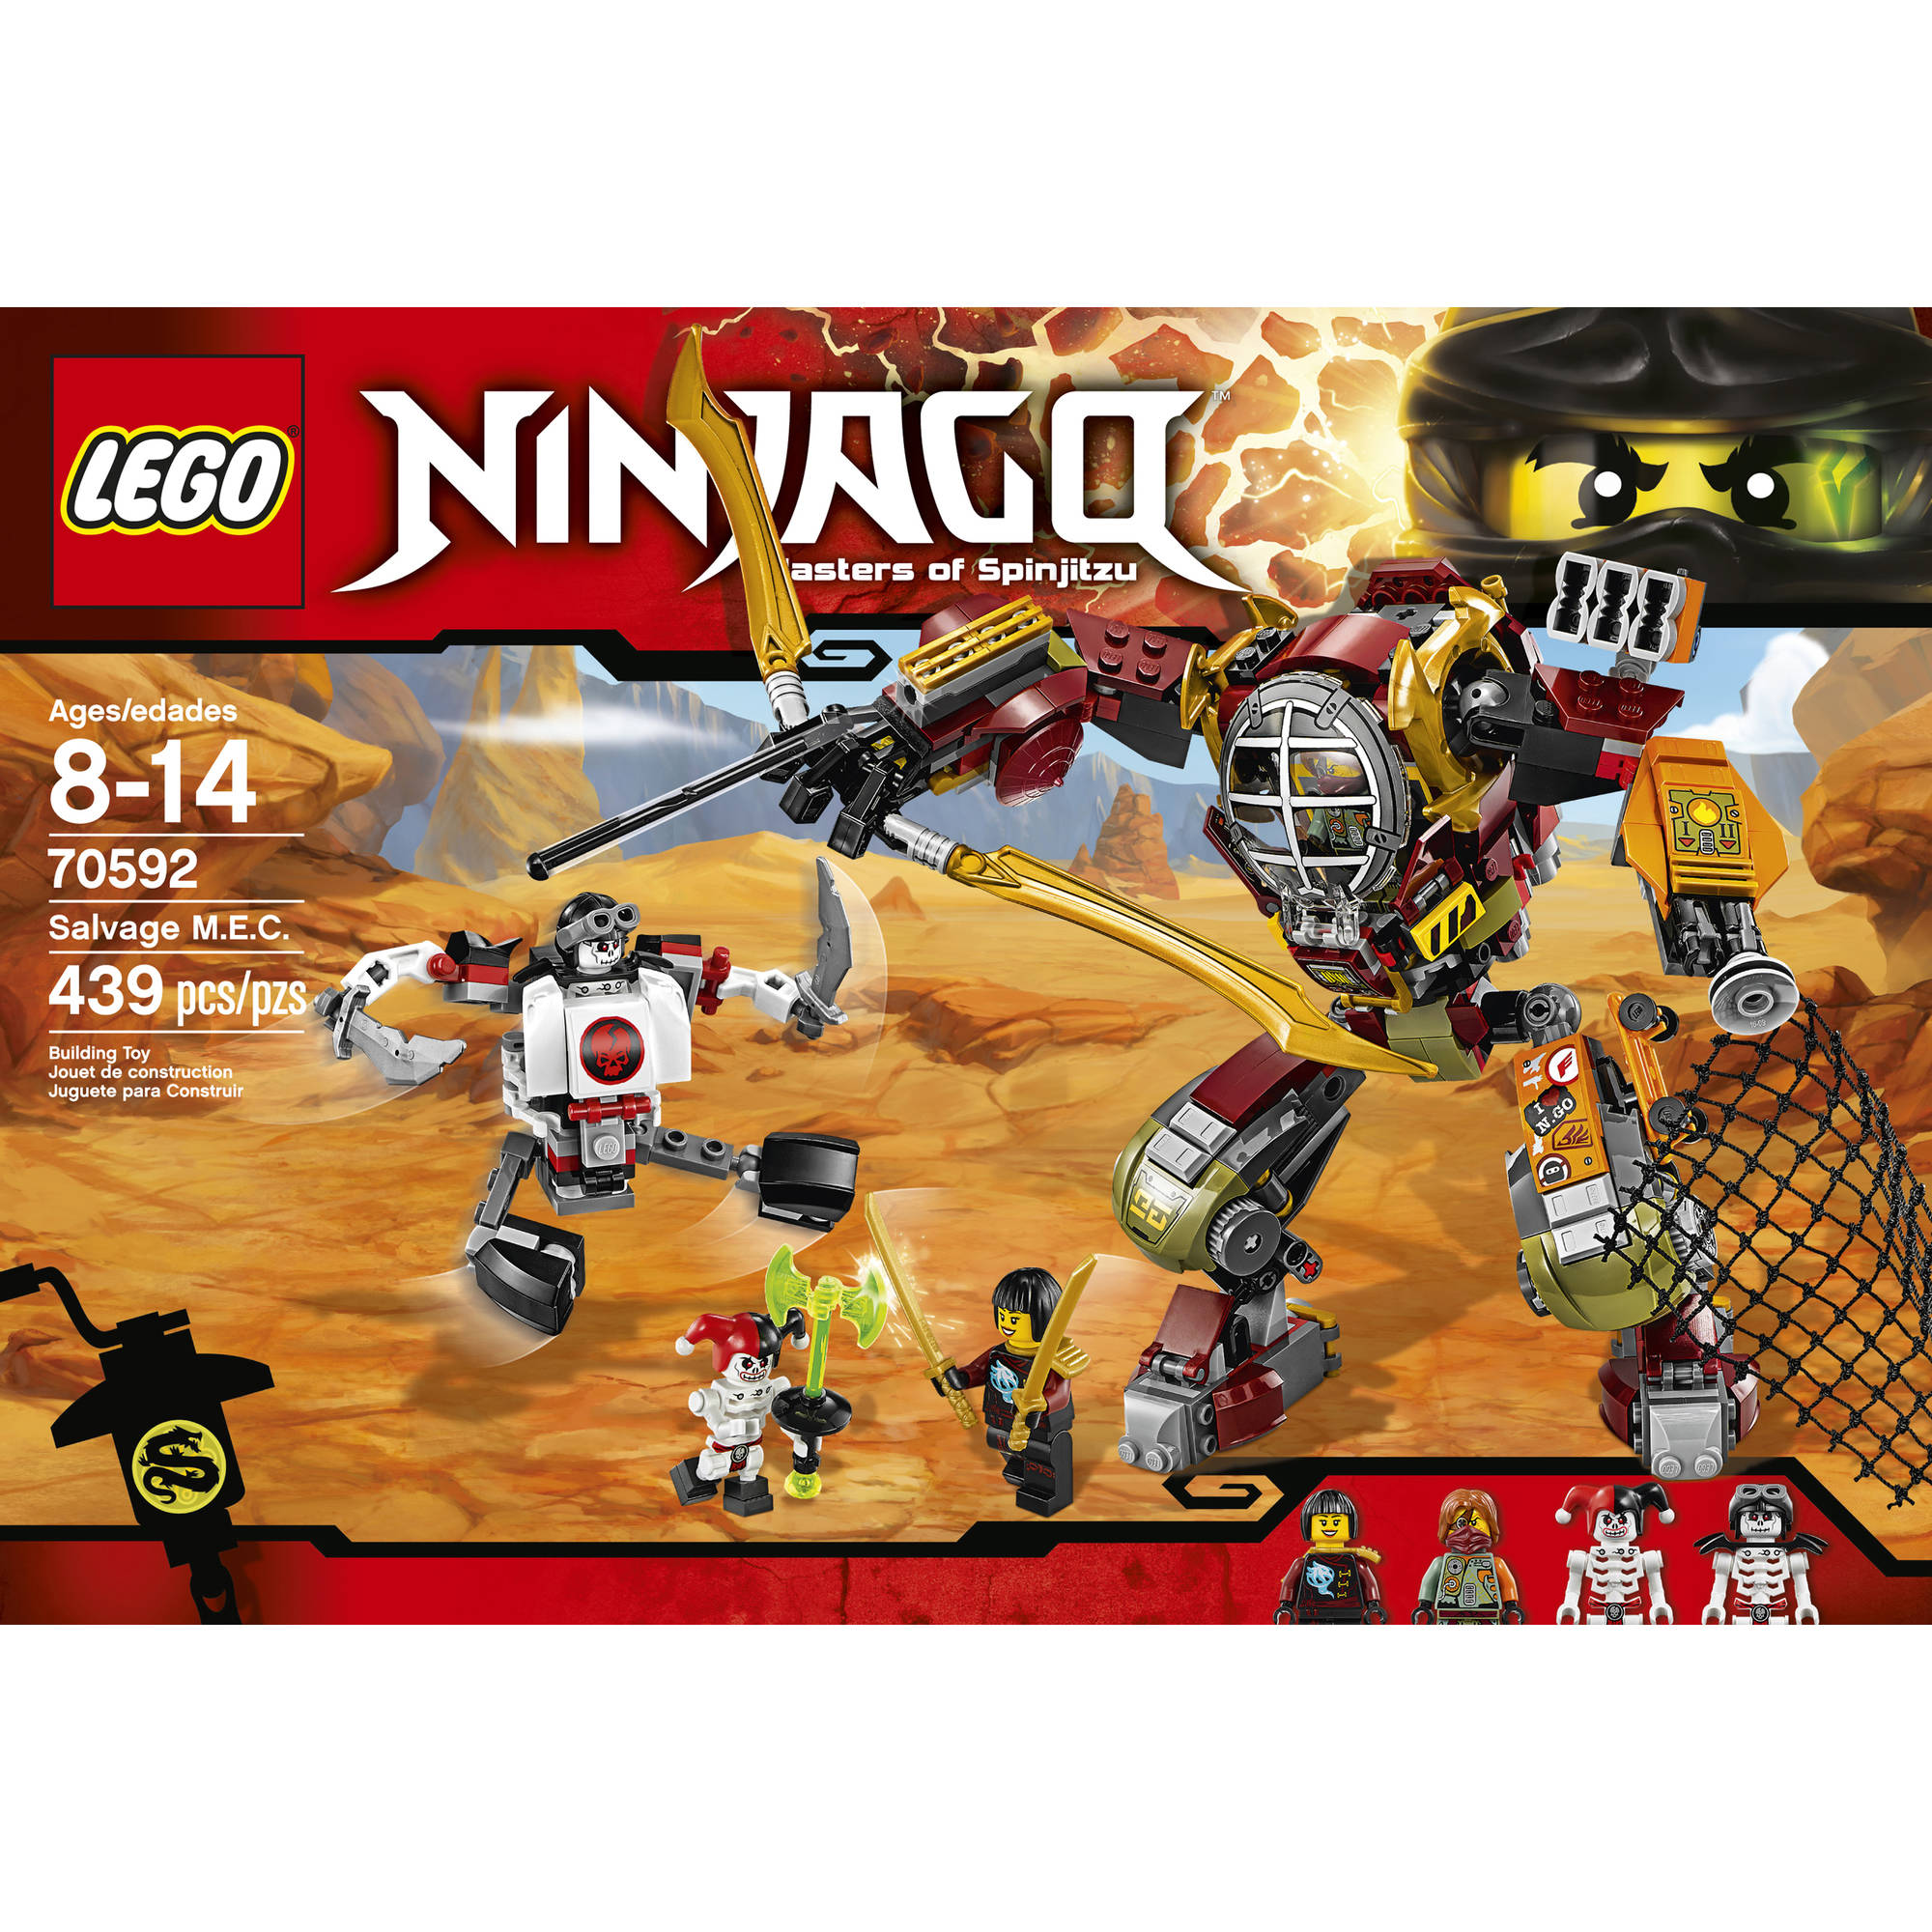 LEGO NINJAGO MASTERS OF SPINJITZU SALVAGE M.E.C. 439 PCS | eBay